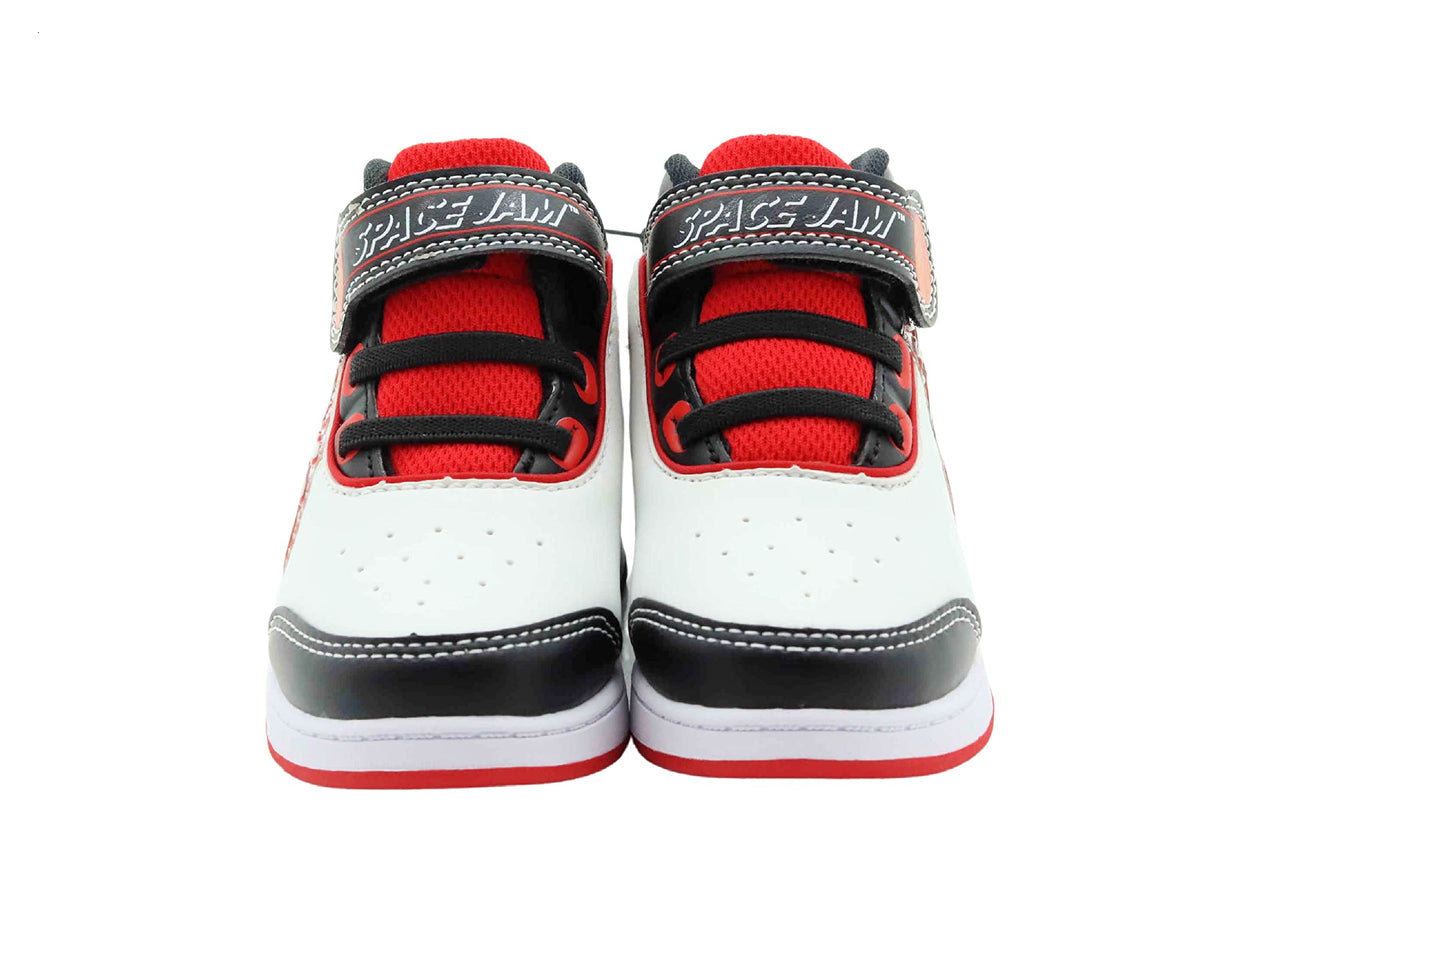 Space Jam Boy's Lighted Hi-Top Sneaker, White/Black/Red (Toddler/Little Kid)